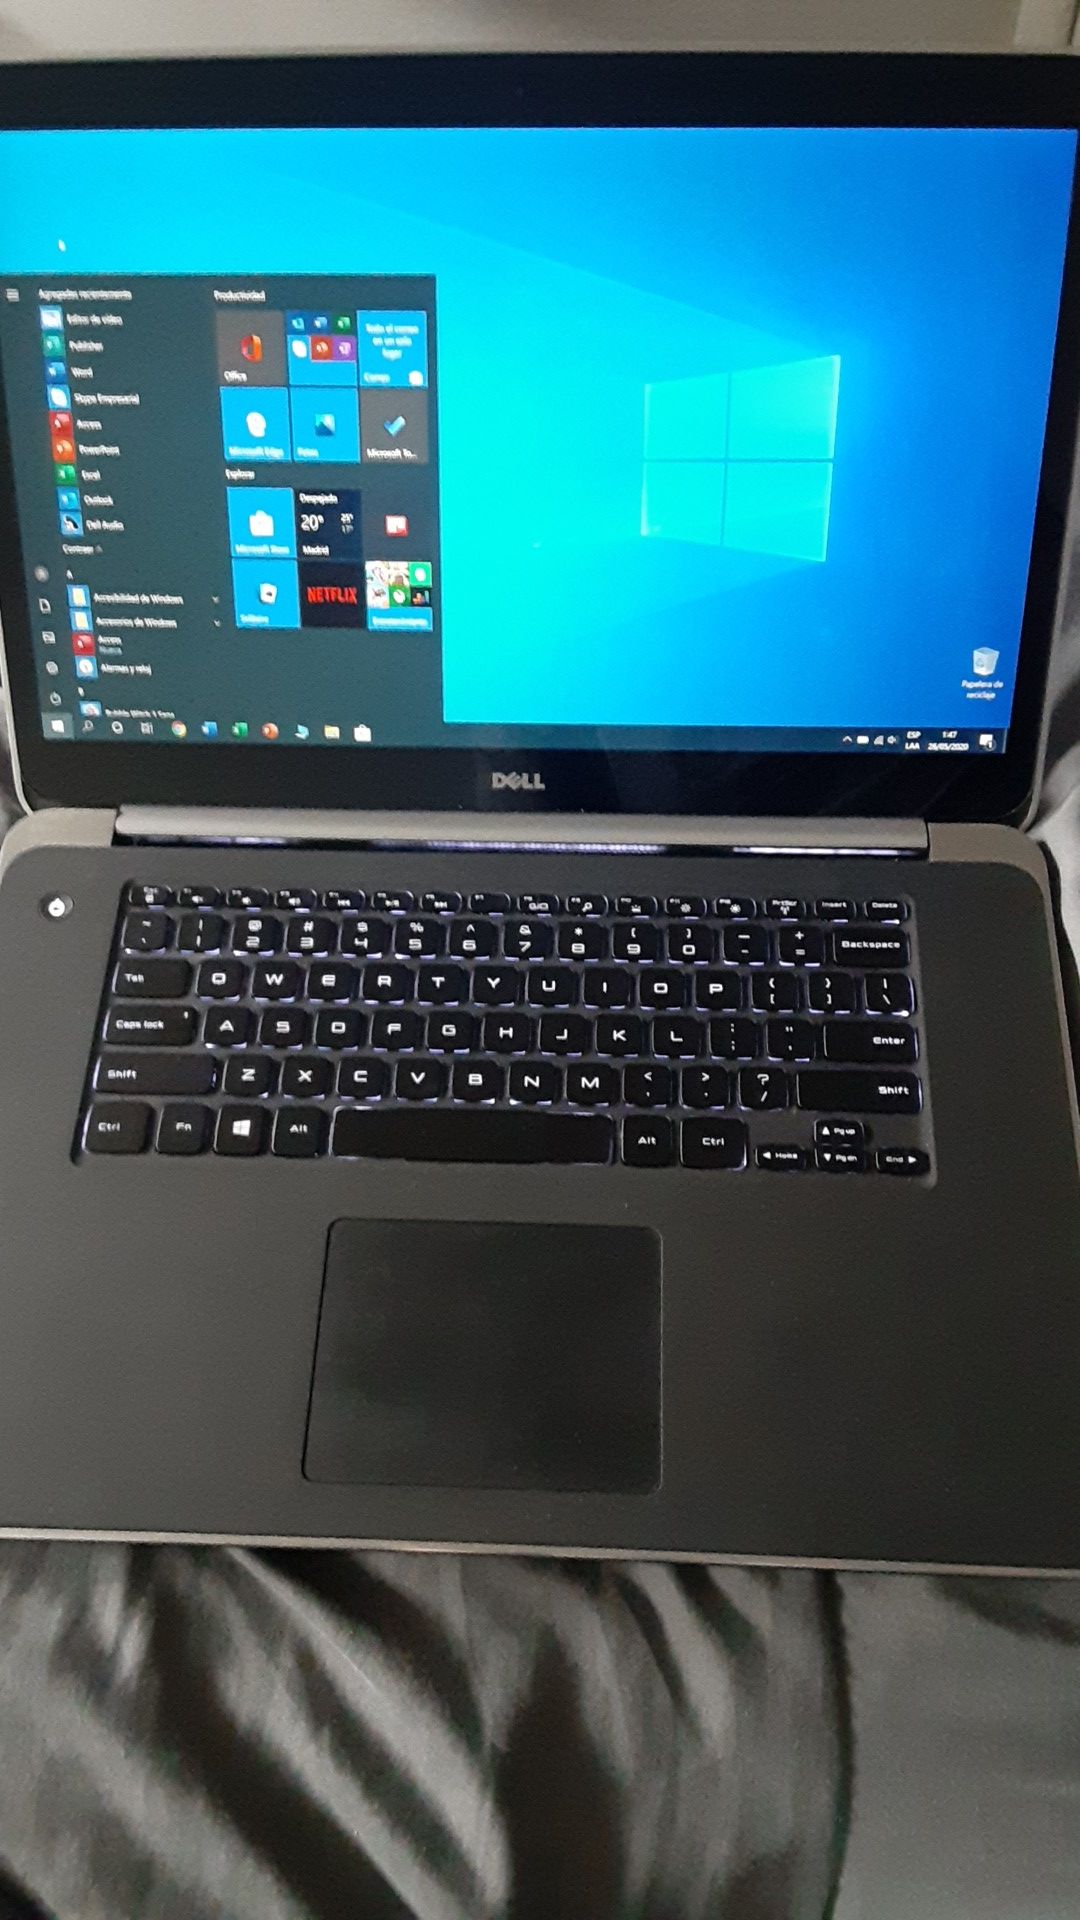 Laptop DELL PRECISION M3800, dual video card ( 2gb nvidia, 2gb intel), 4 gb ram, 320 hdd 4k screen, backlight keyboard